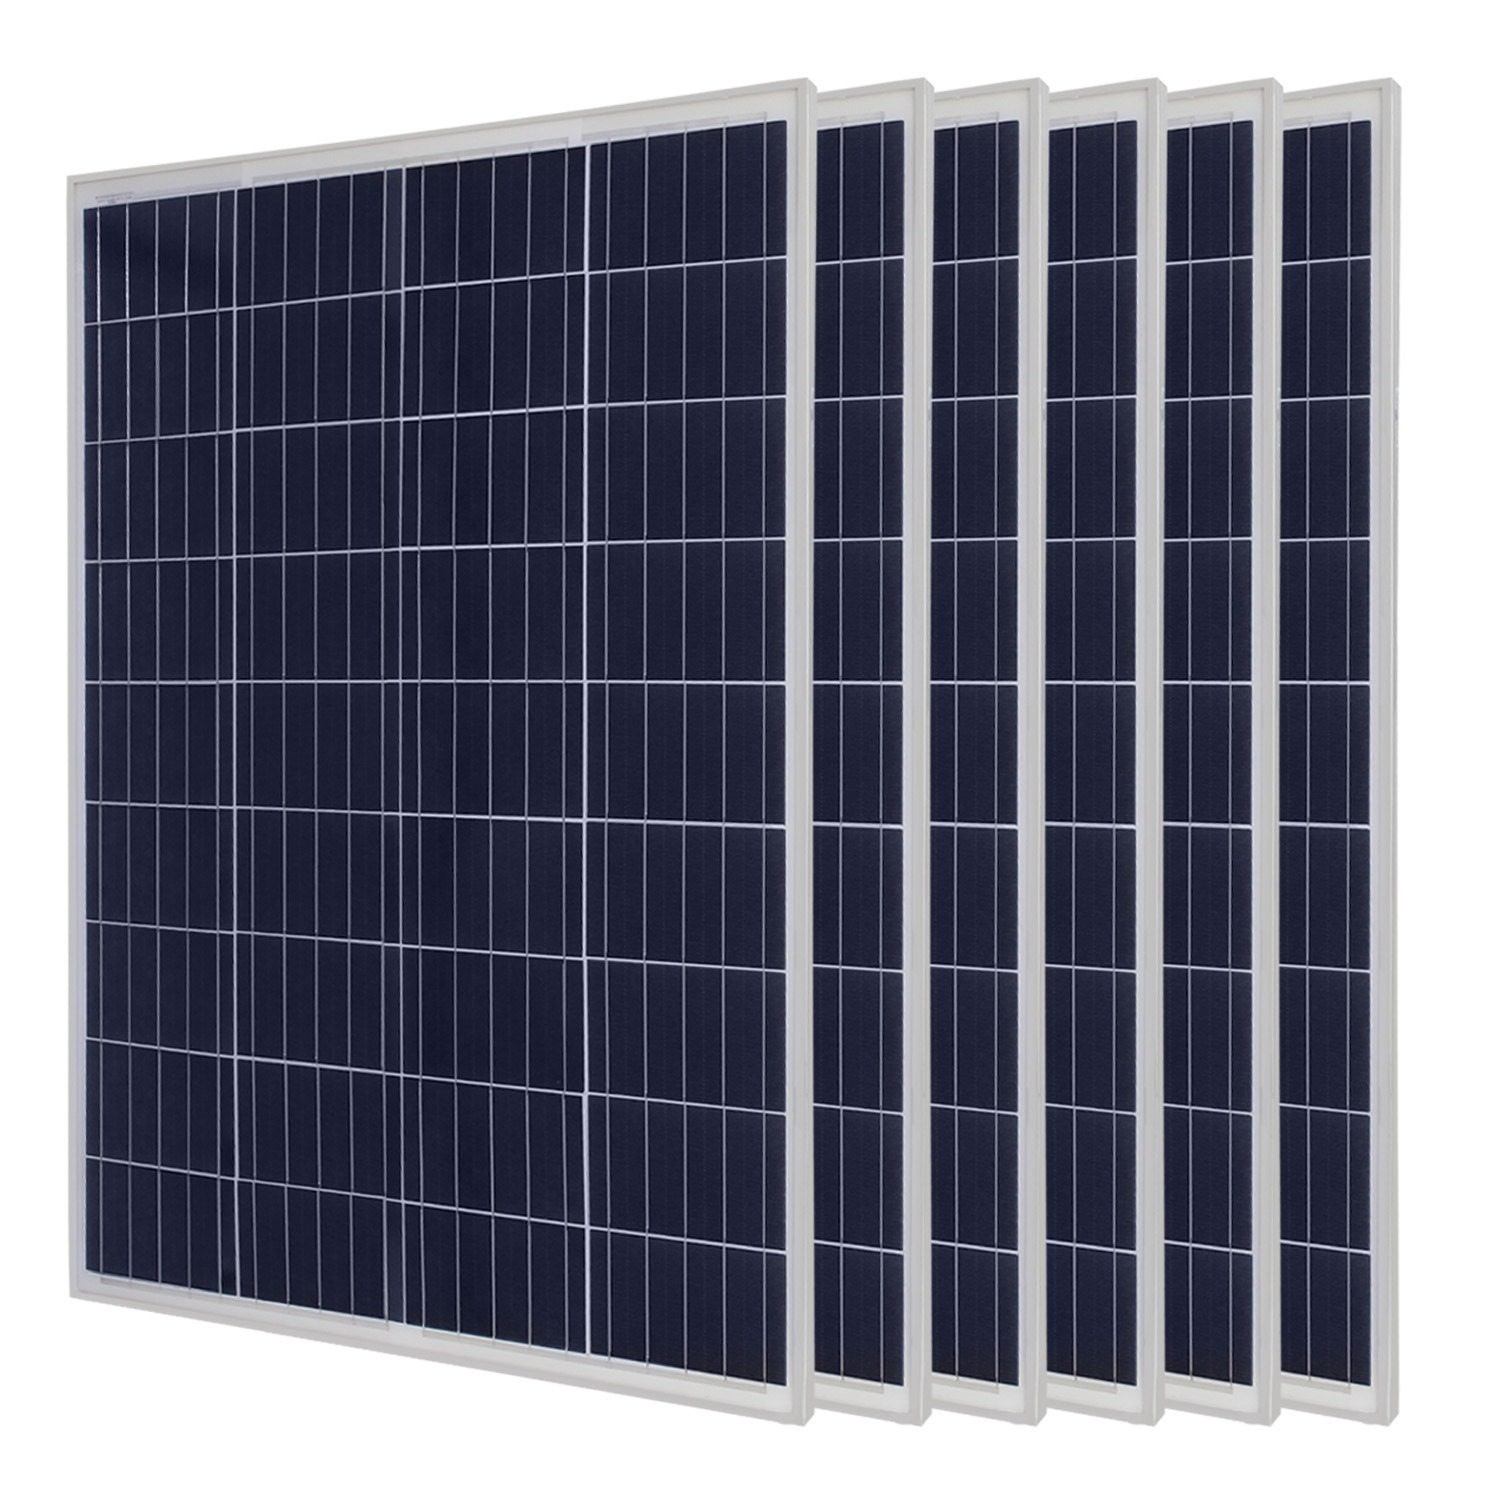 100Watt Solar Panel 12V Poly Battery Charger for Motorhomes, Camper Van - 6 Pack